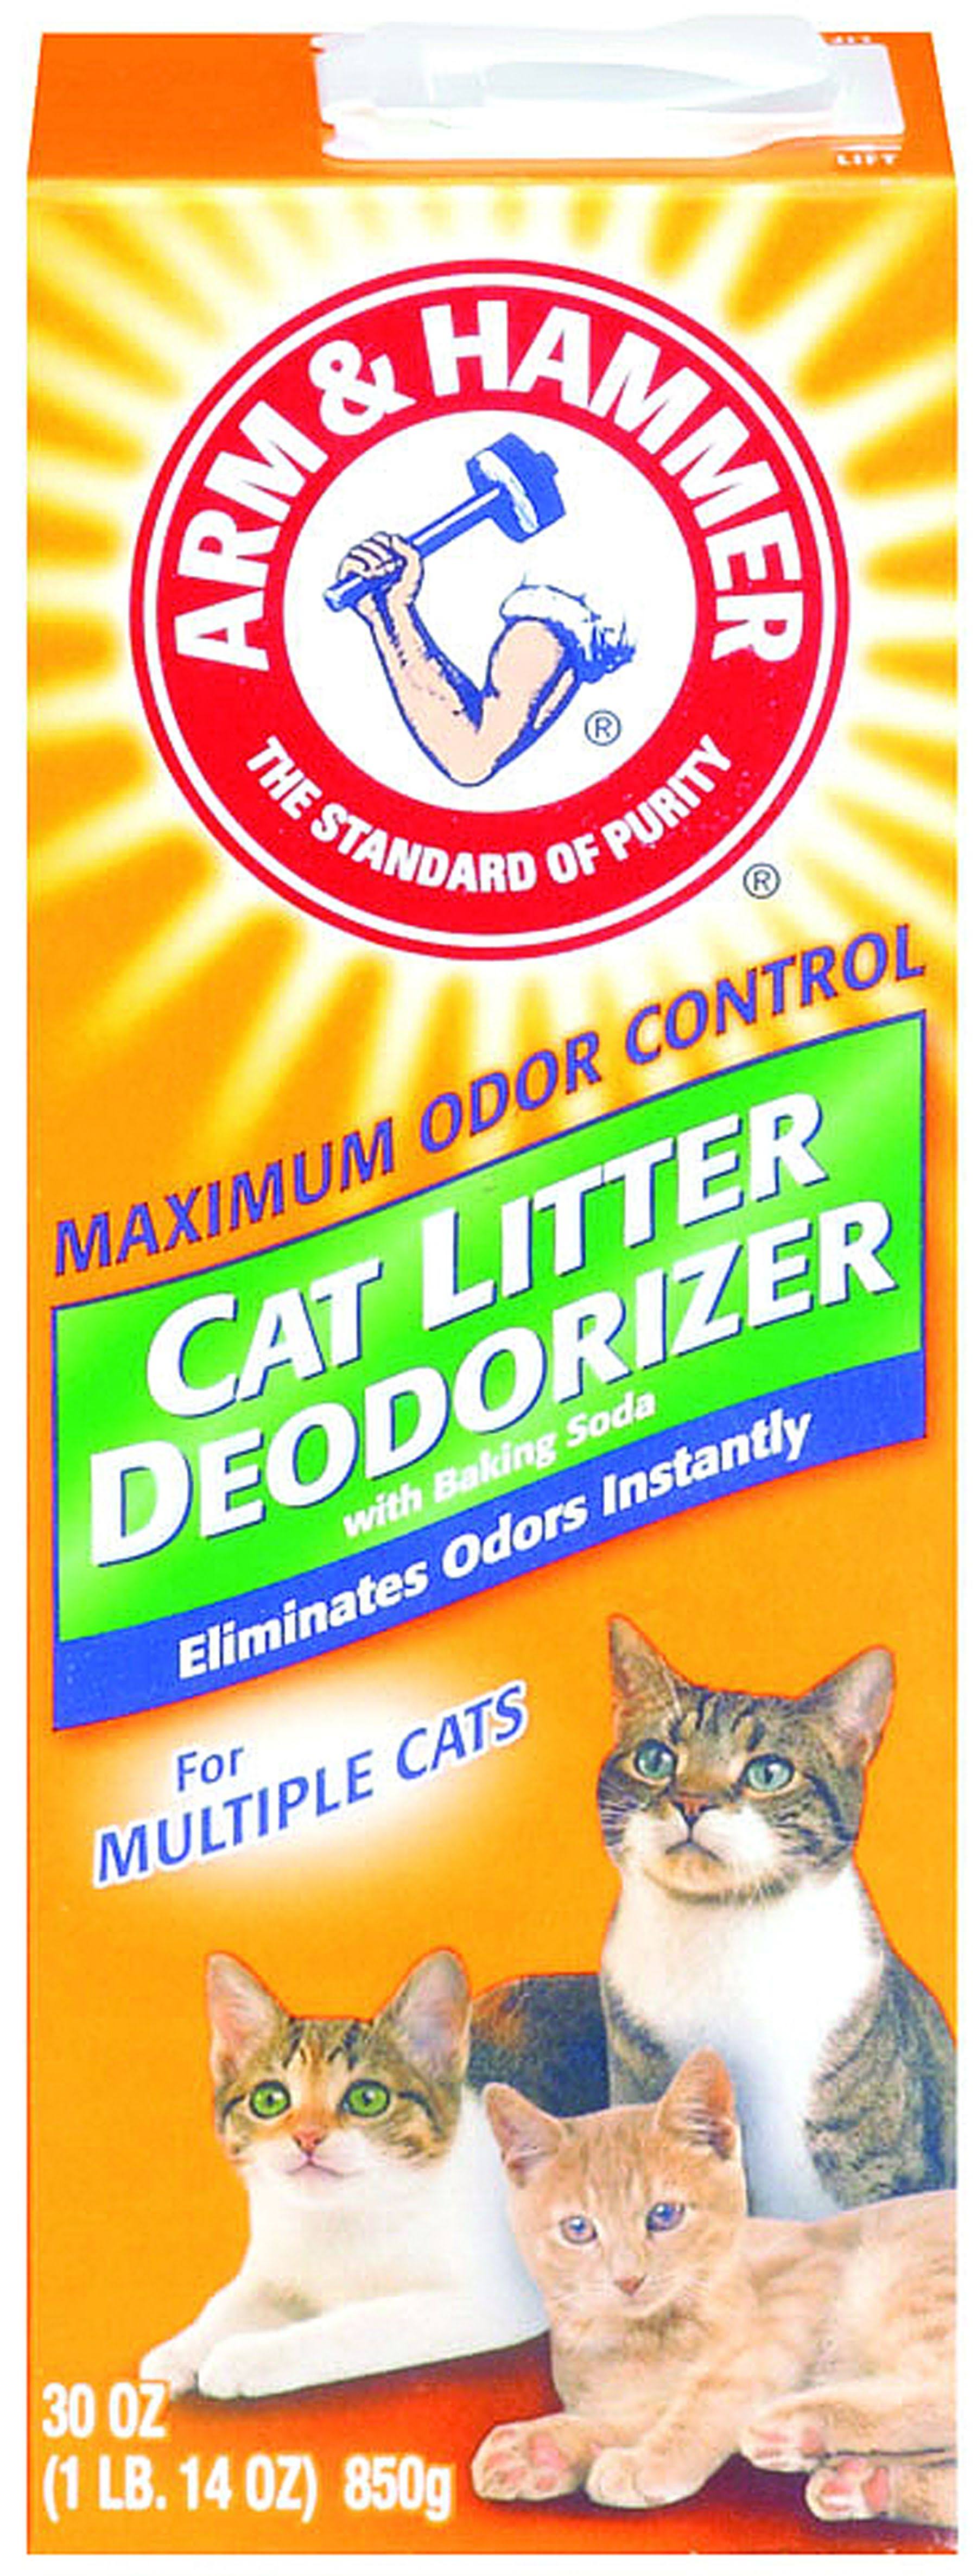 Arm & Hammer Cat Litter Deodorizer with Baking Soda